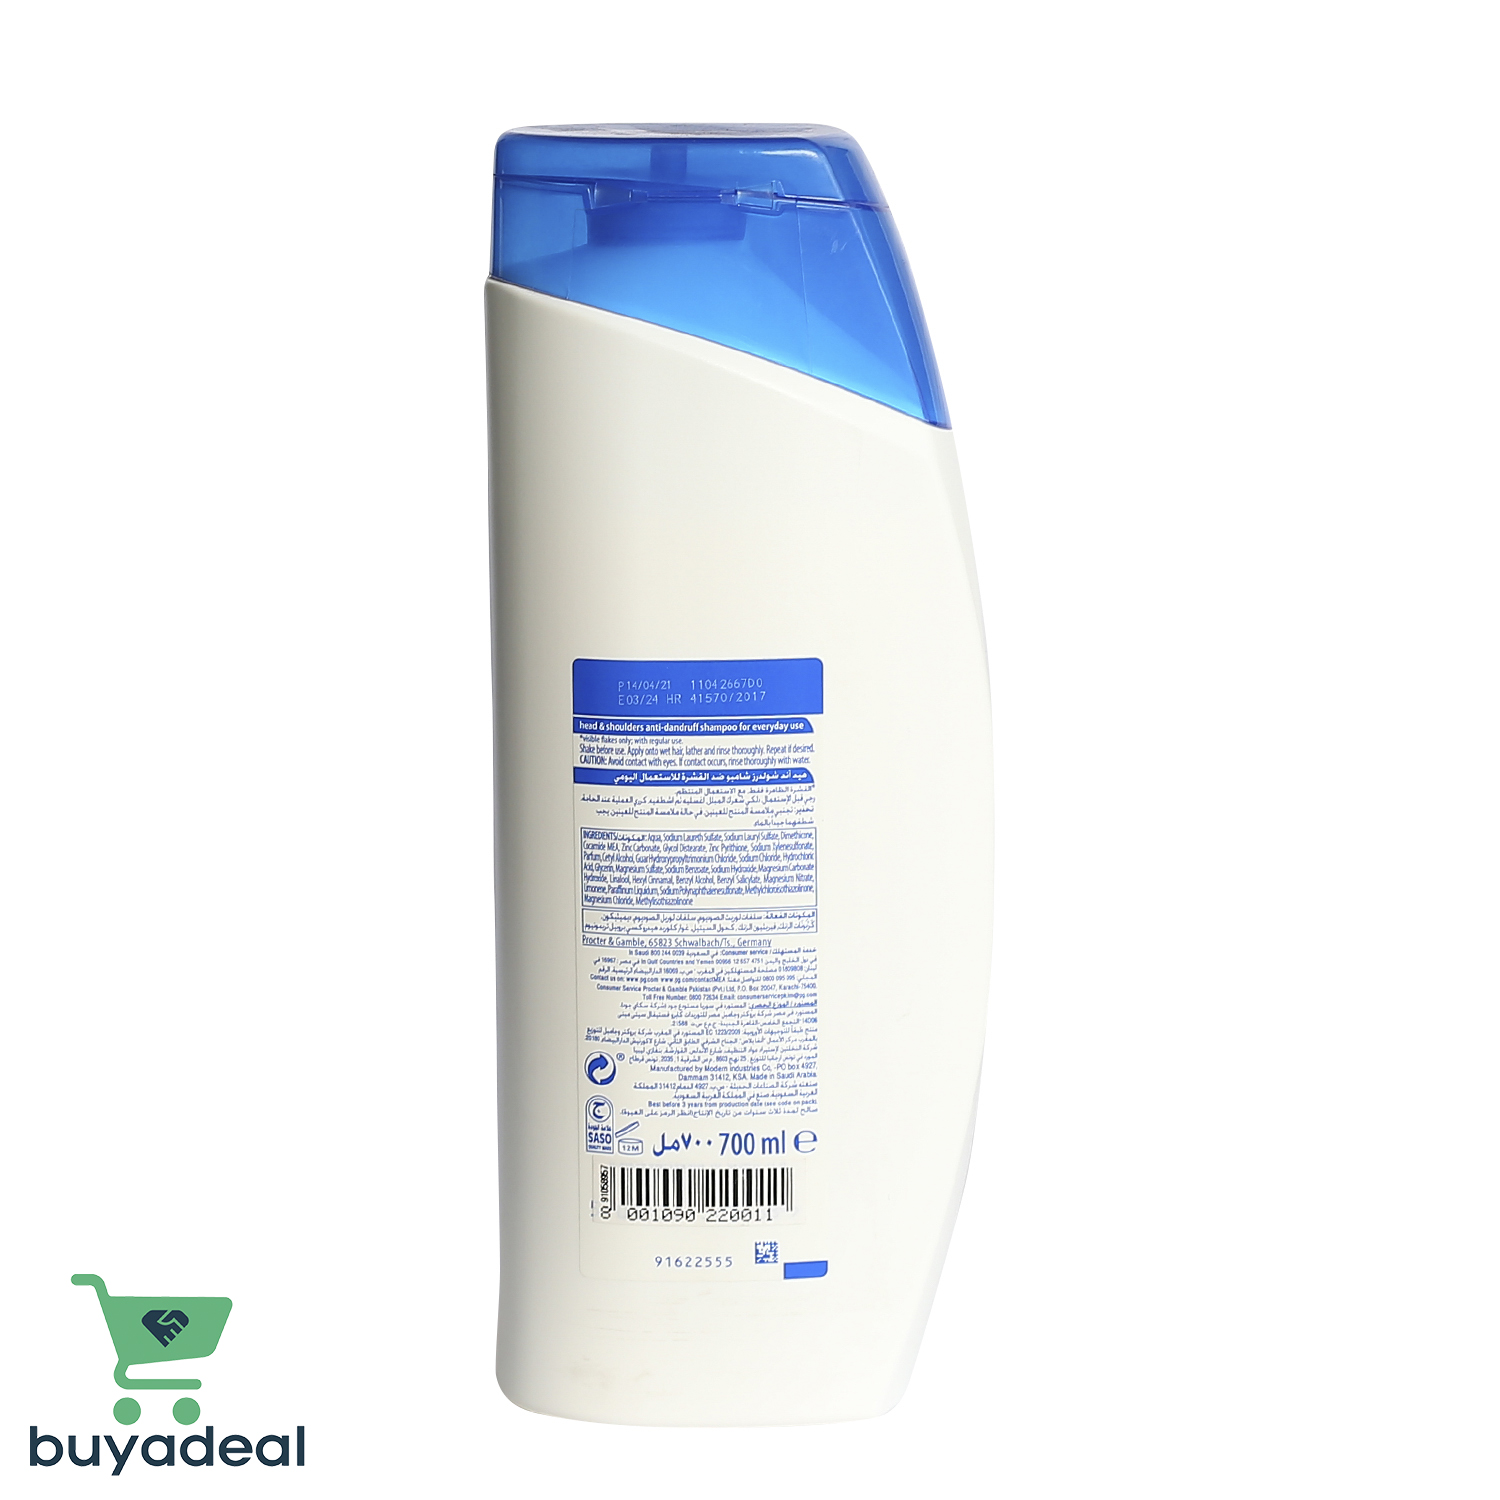 Buyadeal Product Head & Shoulders Anti-Dandruff Smooth & Silky Shampoo 400ml